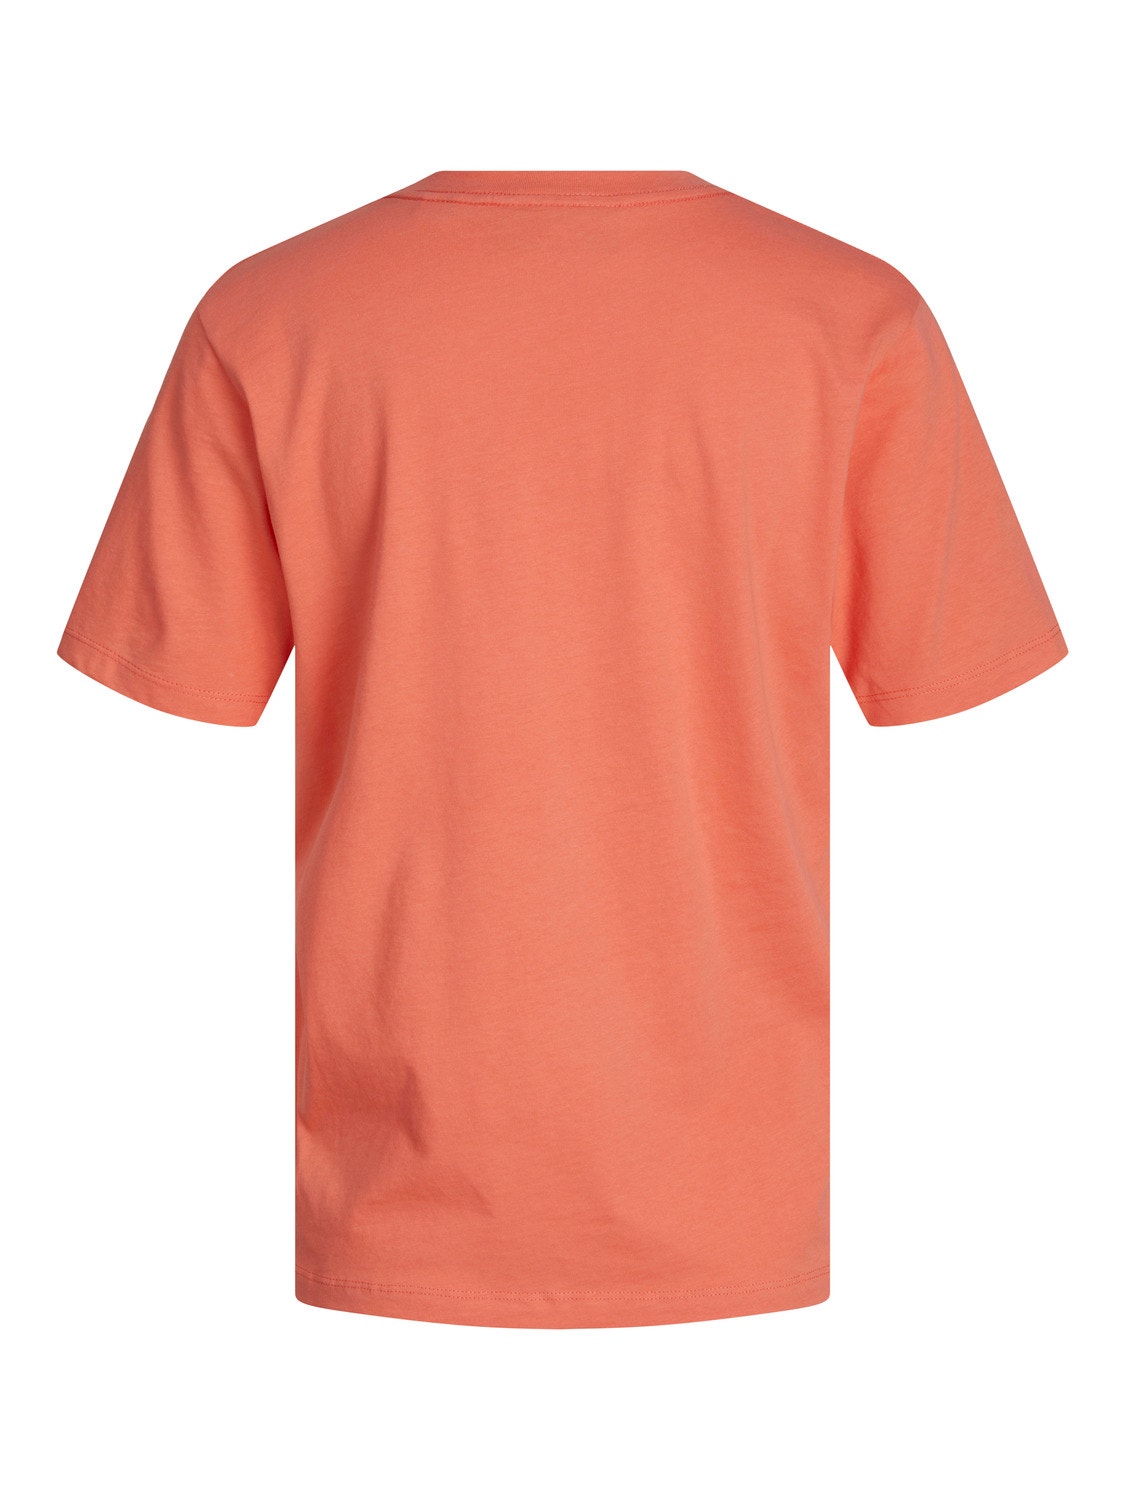 JJXX Καλοκαιρινό μπλουζάκι -Peach Echo  - 12200182